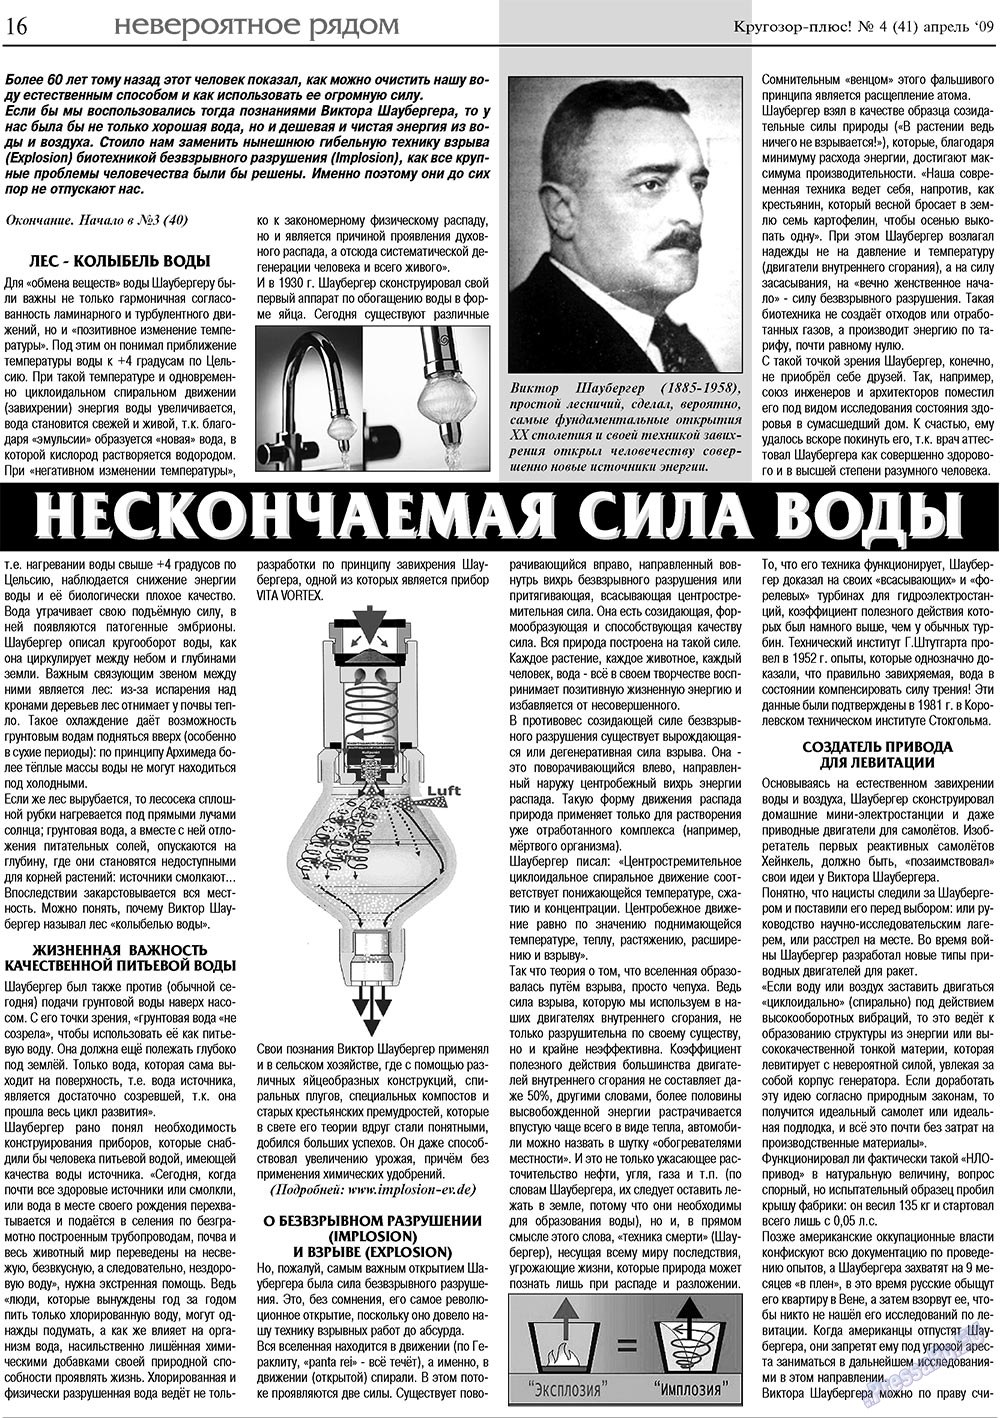 Кругозор плюс! (газета). 2009 год, номер 4, стр. 16